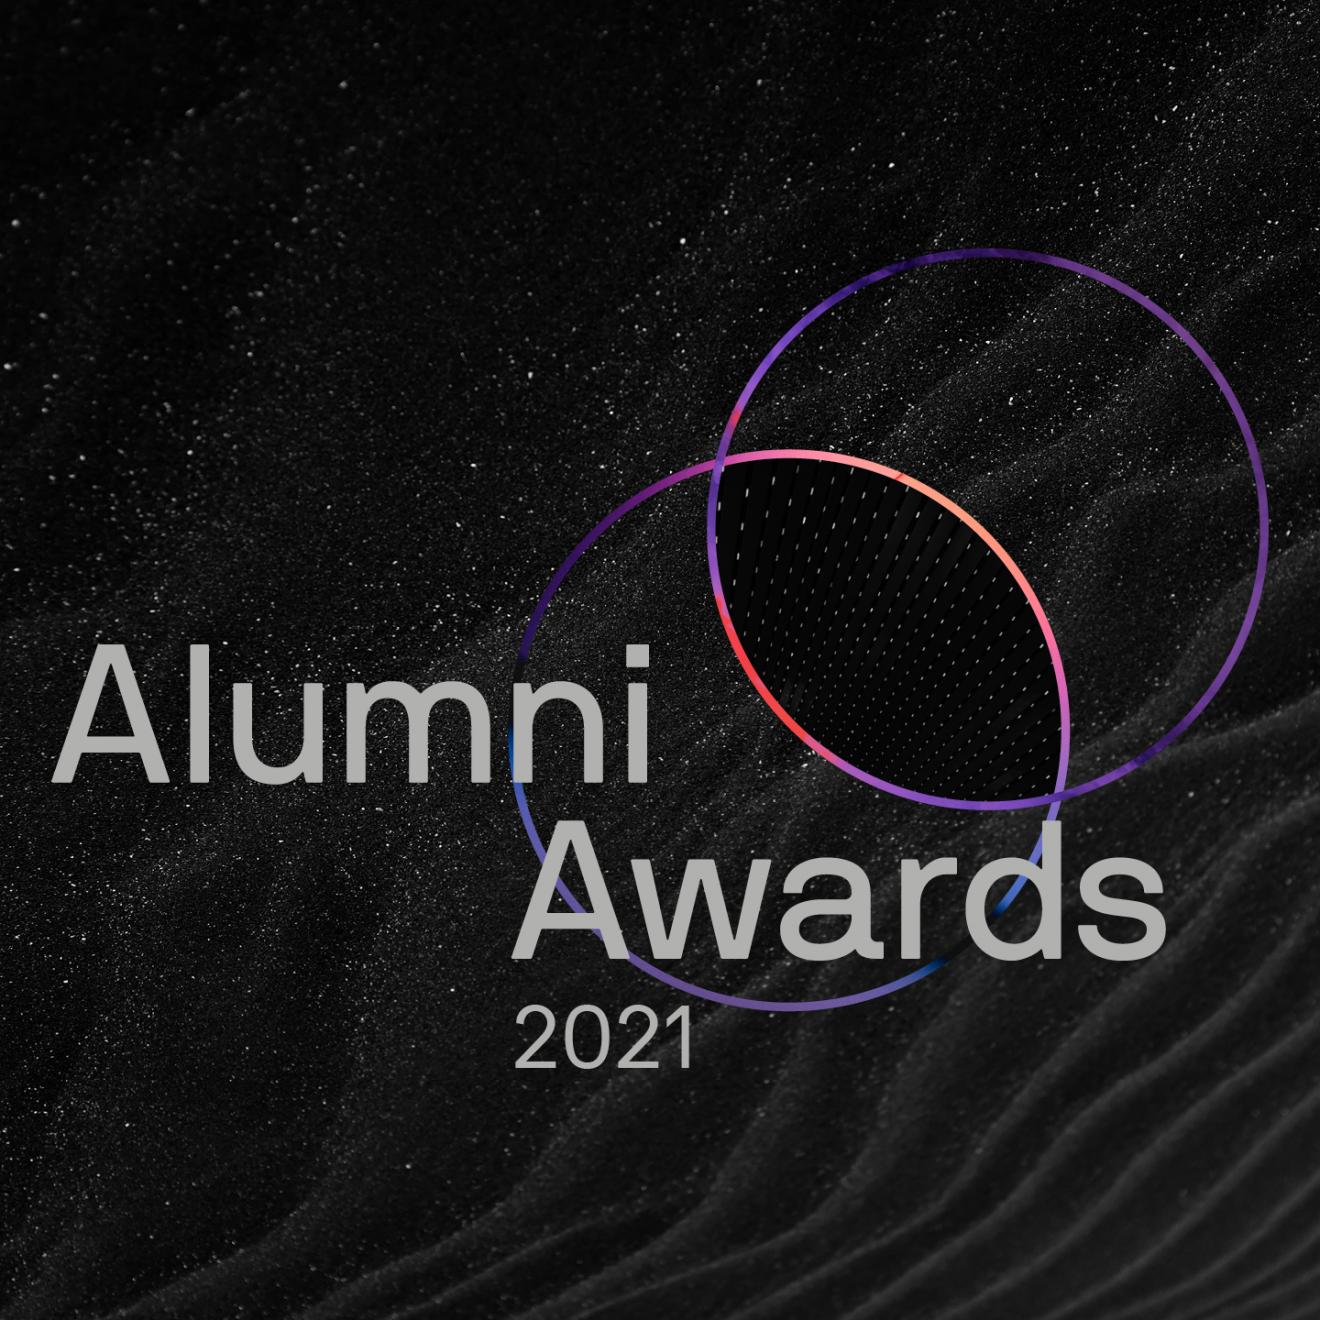 Alumni Awards 2021 on a black starry background